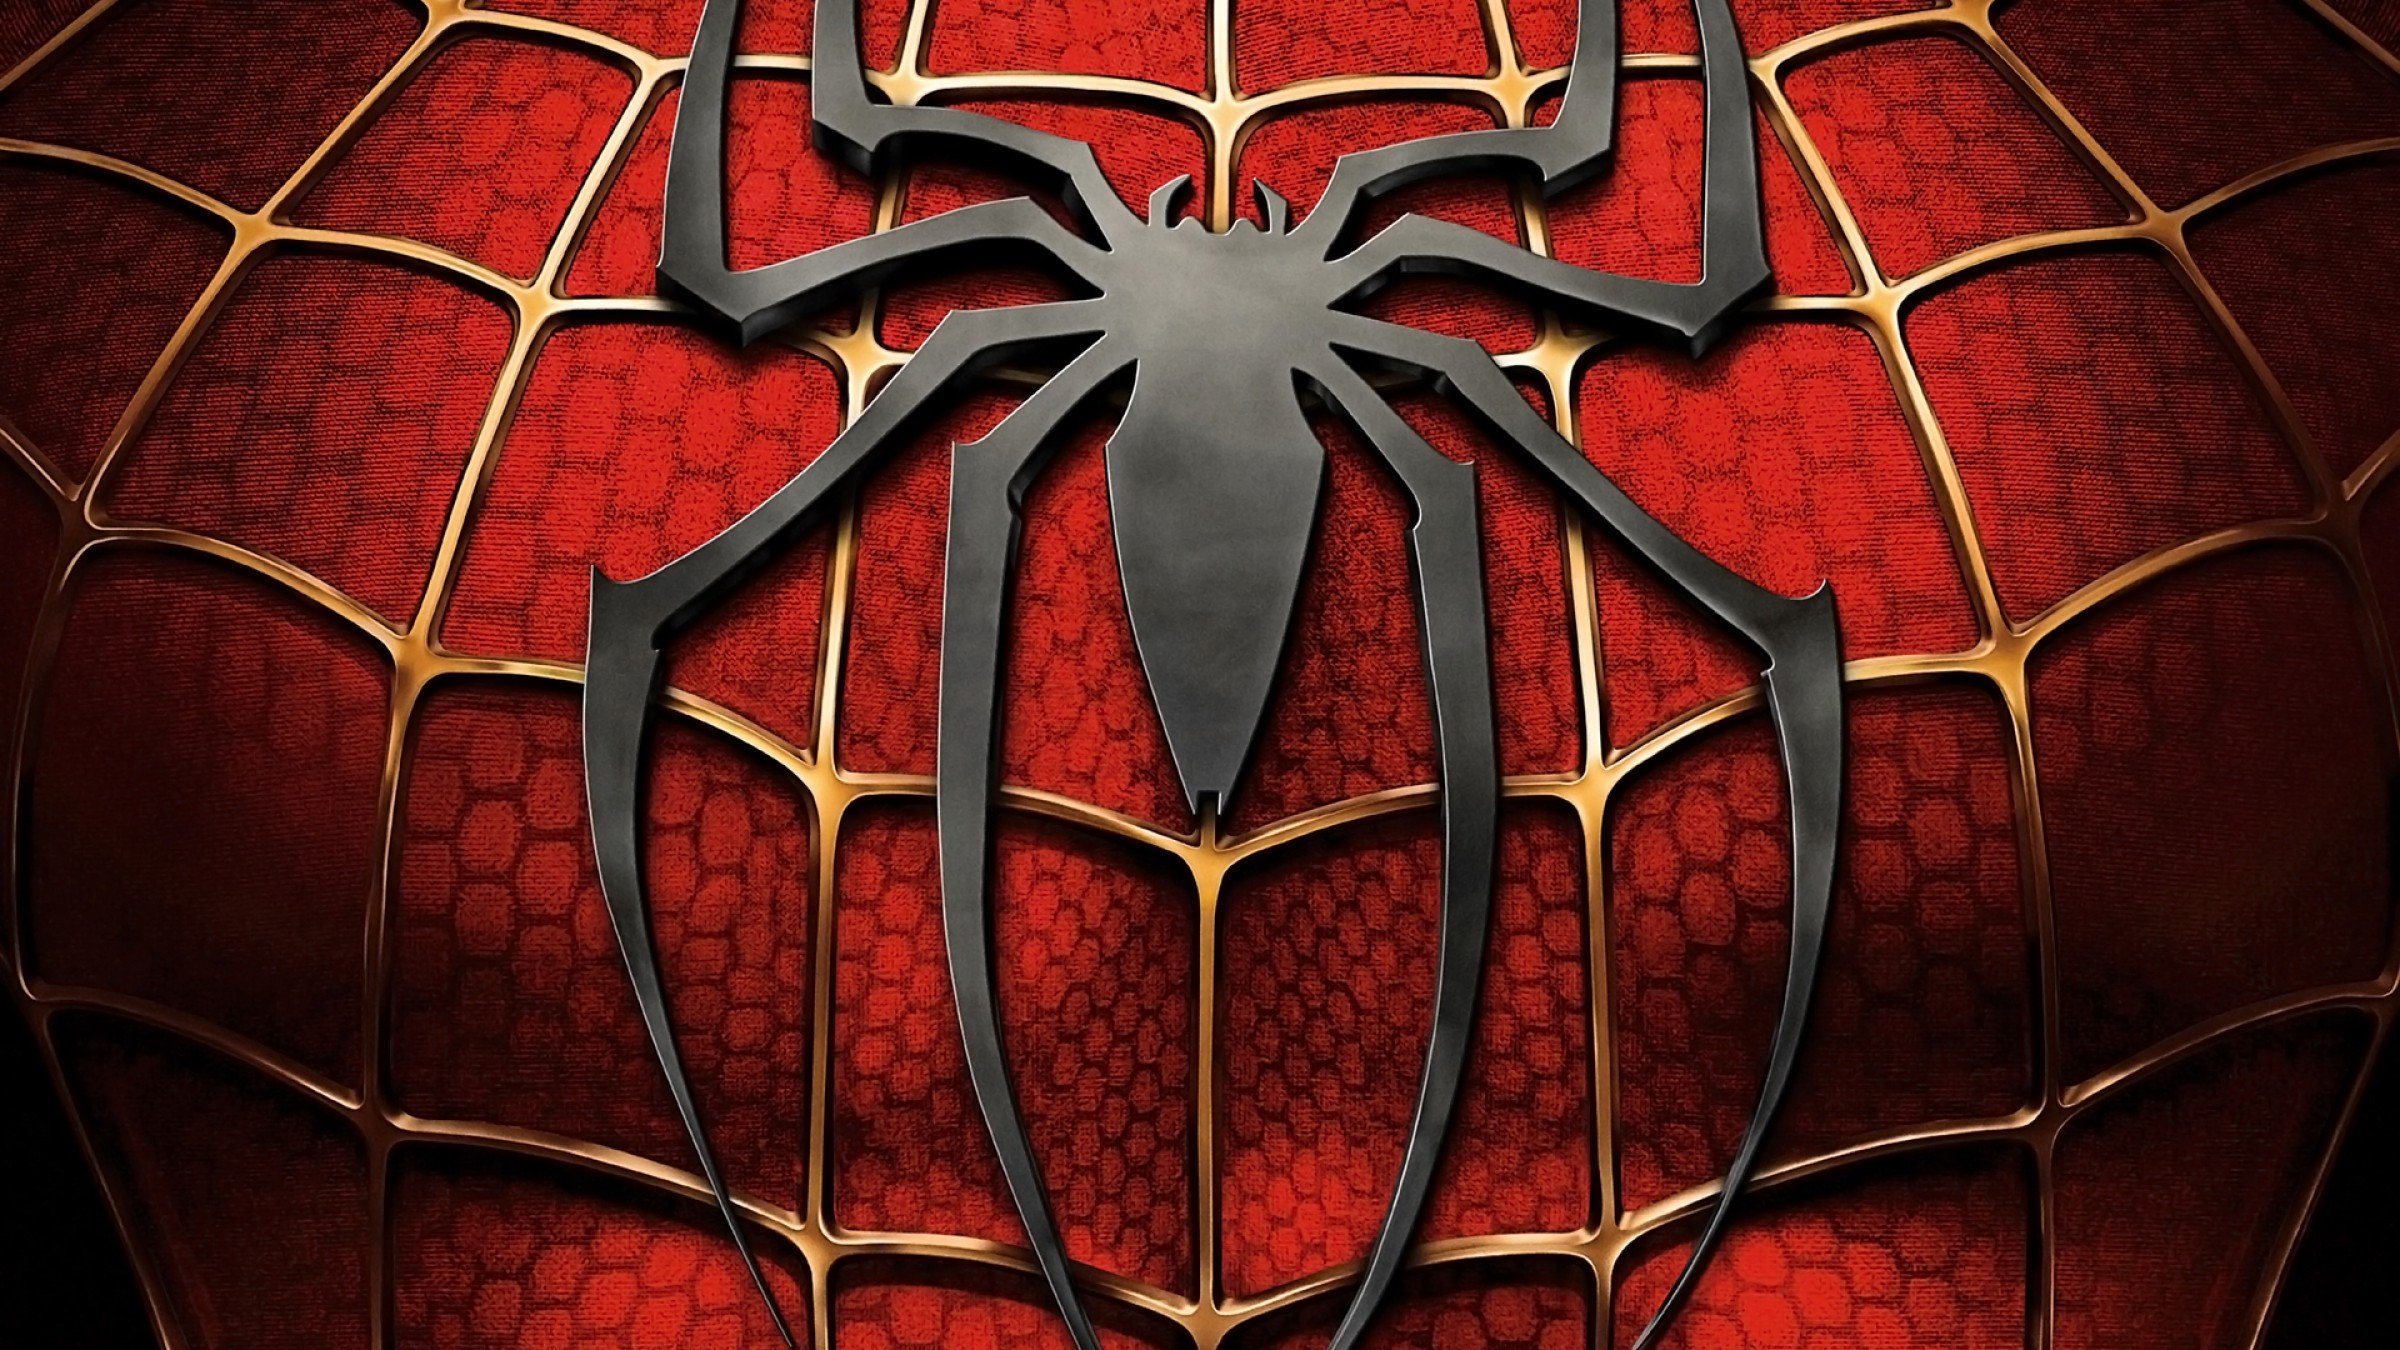 AMAZING SPIDER-MAN 2 Action Adventure Fantasy Comics Movie Spider Spiderman Marvel Superhero (28) Wallpaper